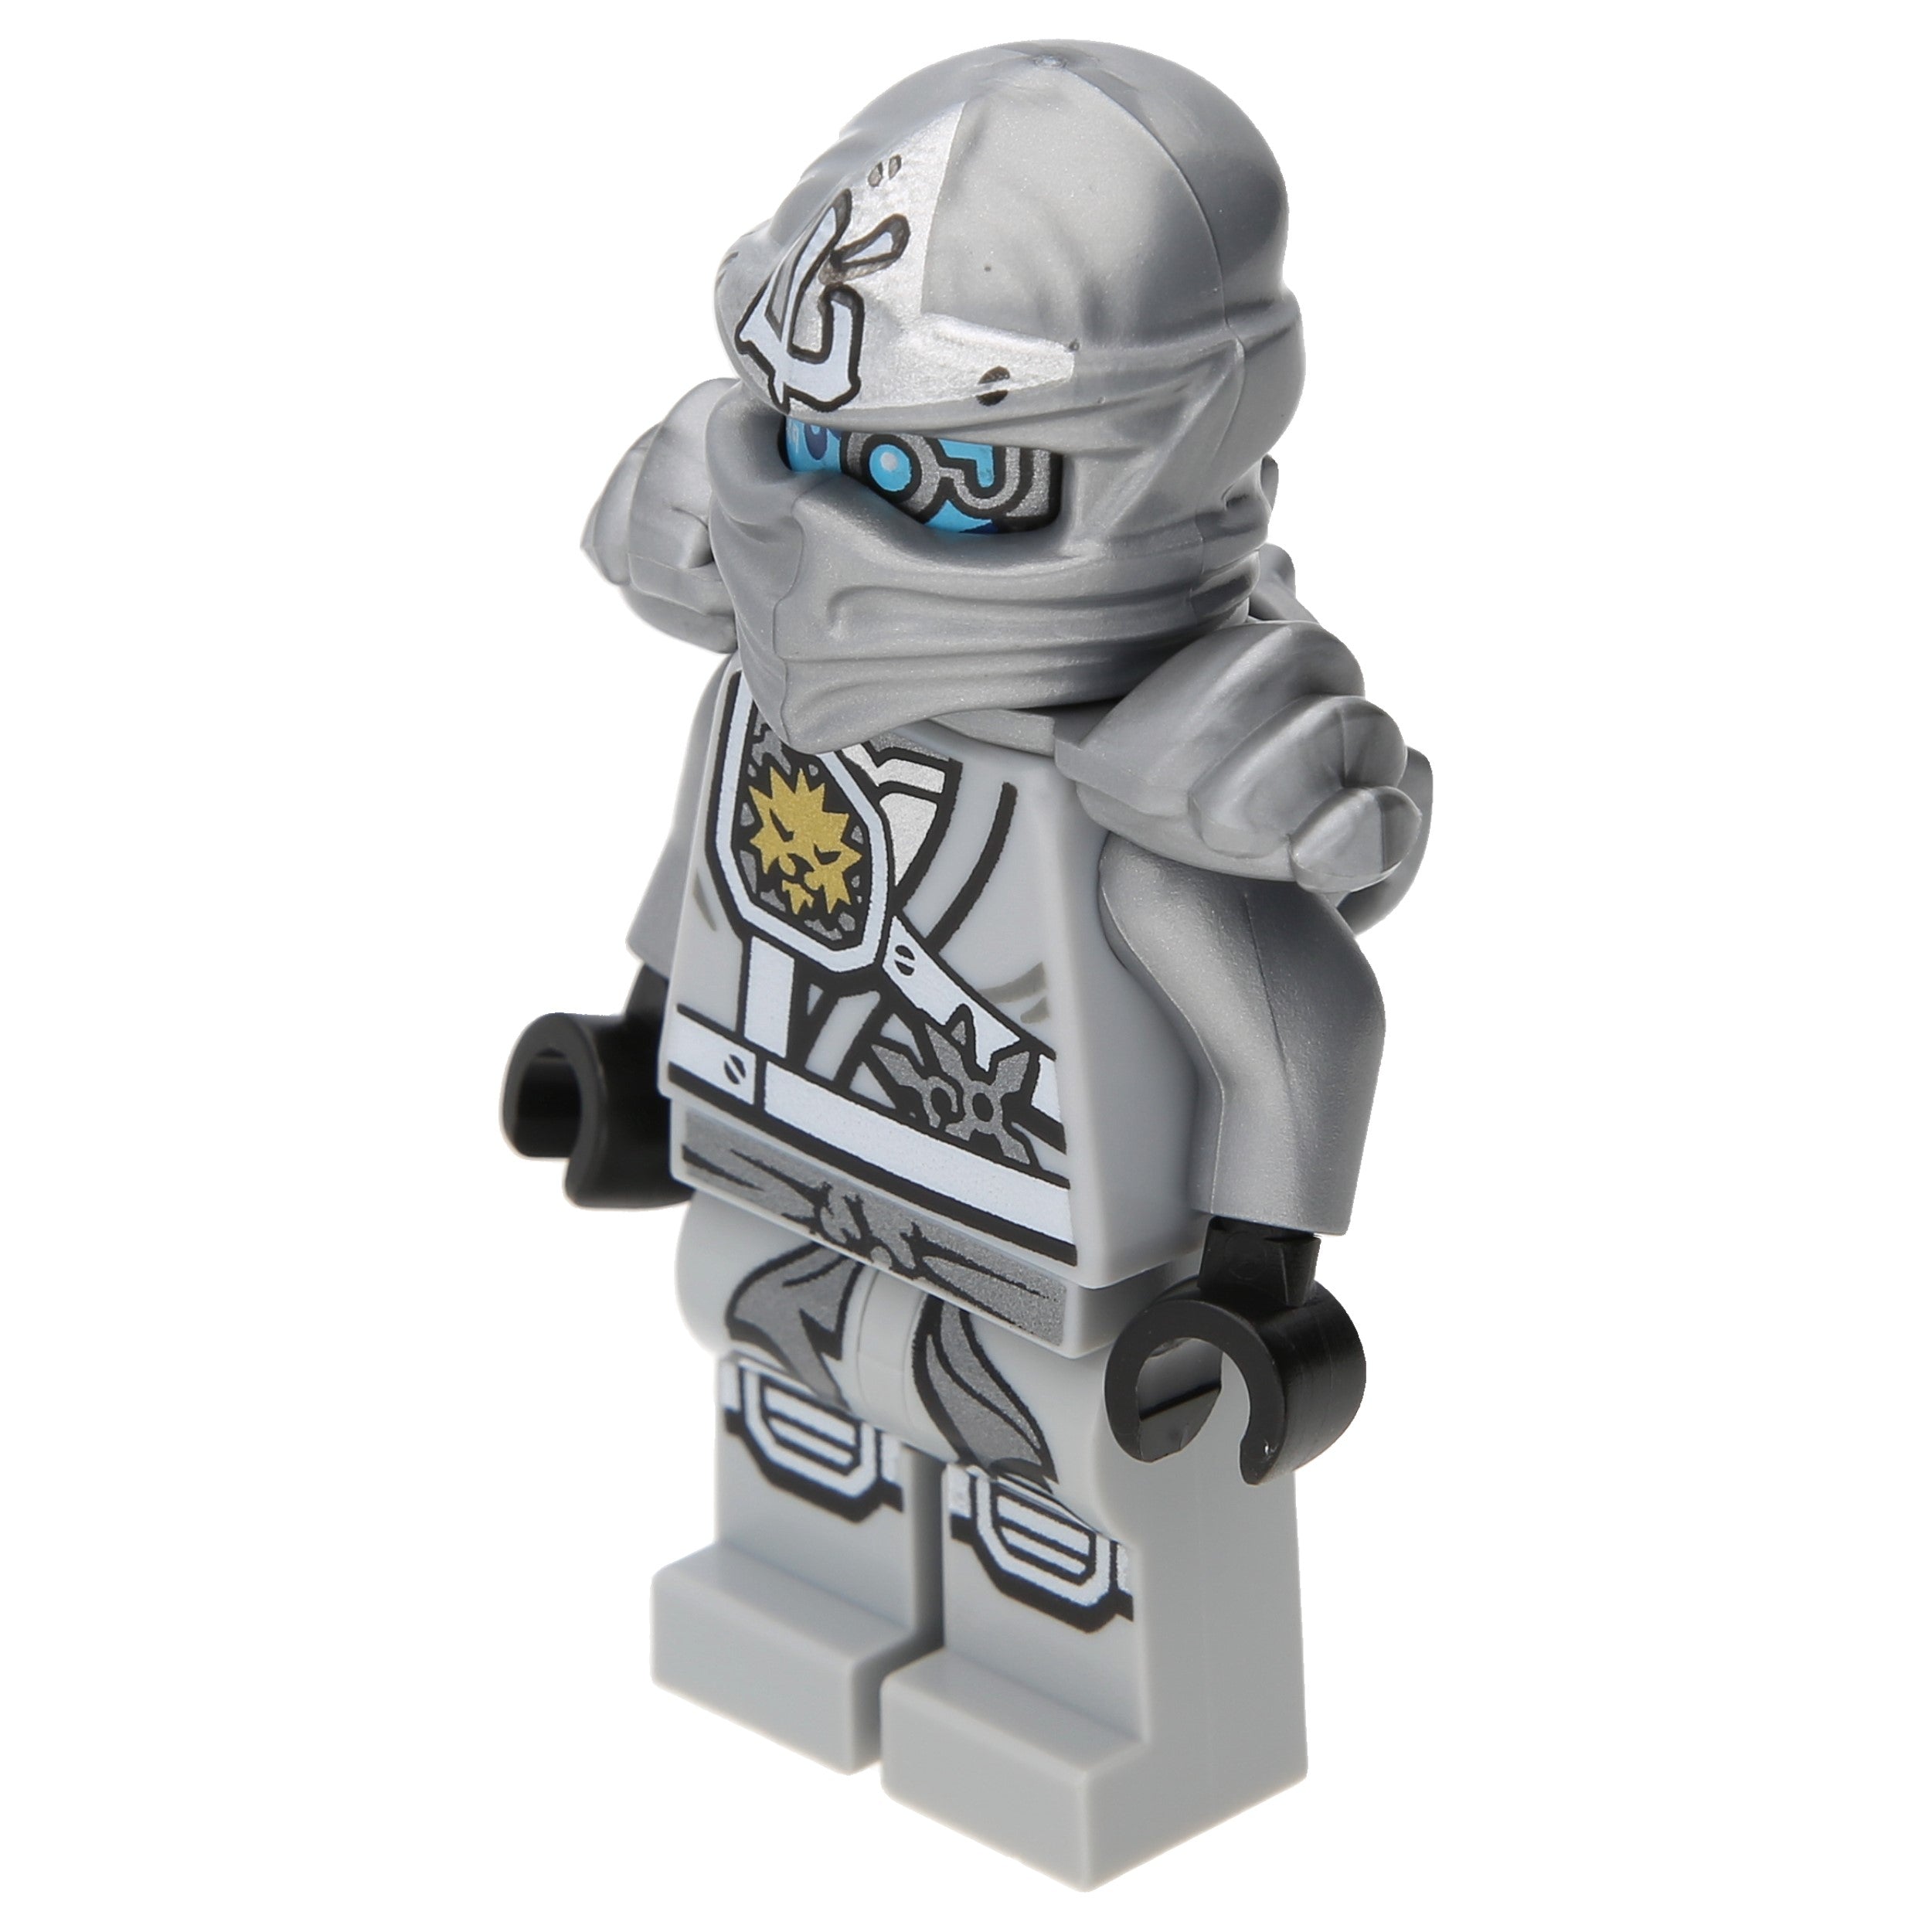 LEGO Ninjago Minifigures - Titan Ninja Zane with sword sheath